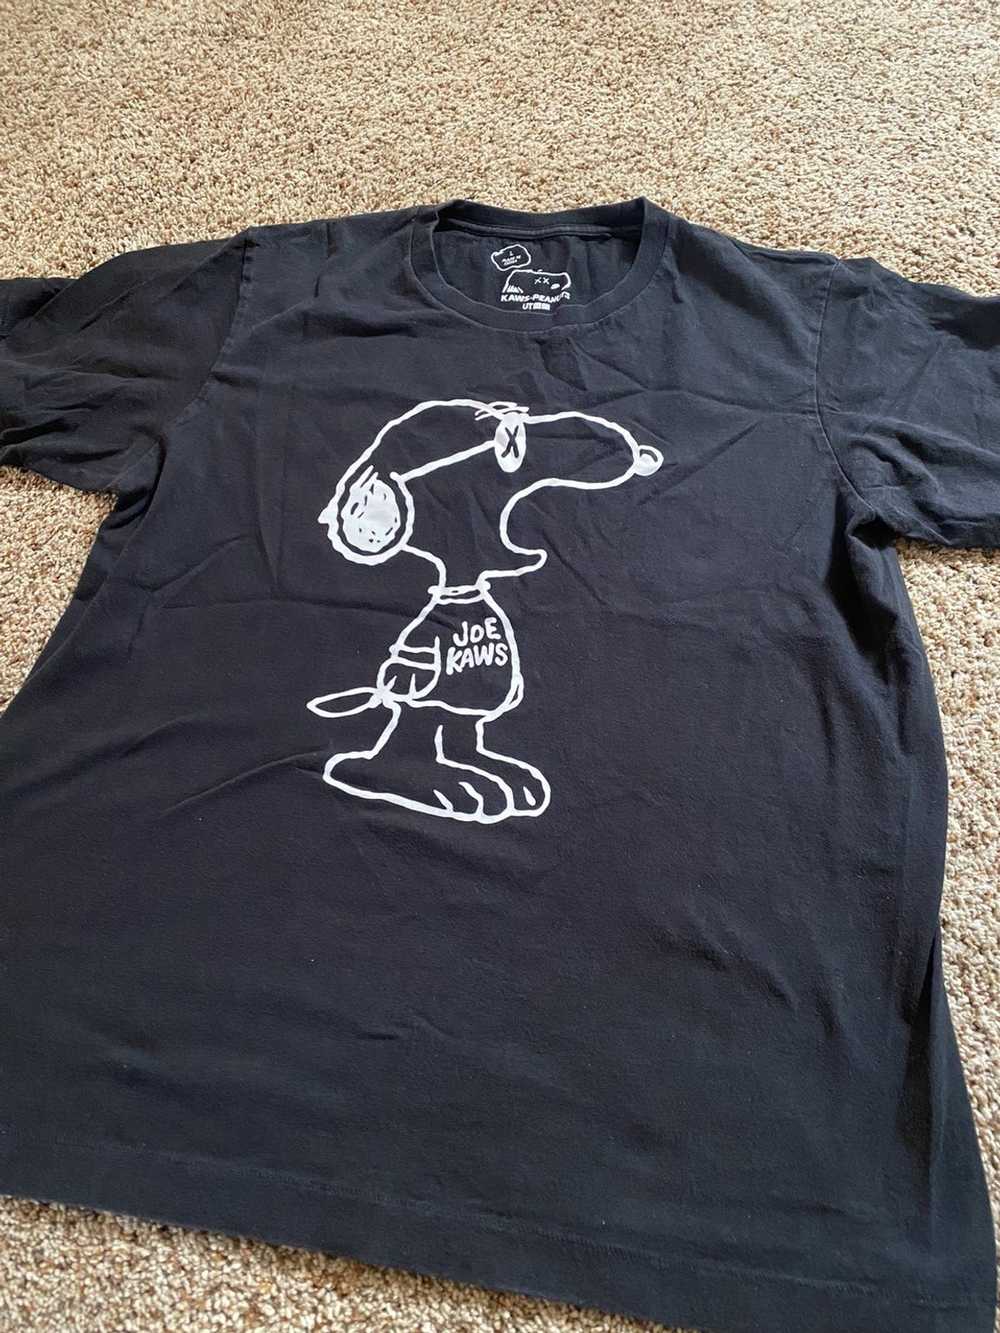 Uniqlo Kaws X Peanuts X Uniqlo Snoopy T-Shirt - image 1